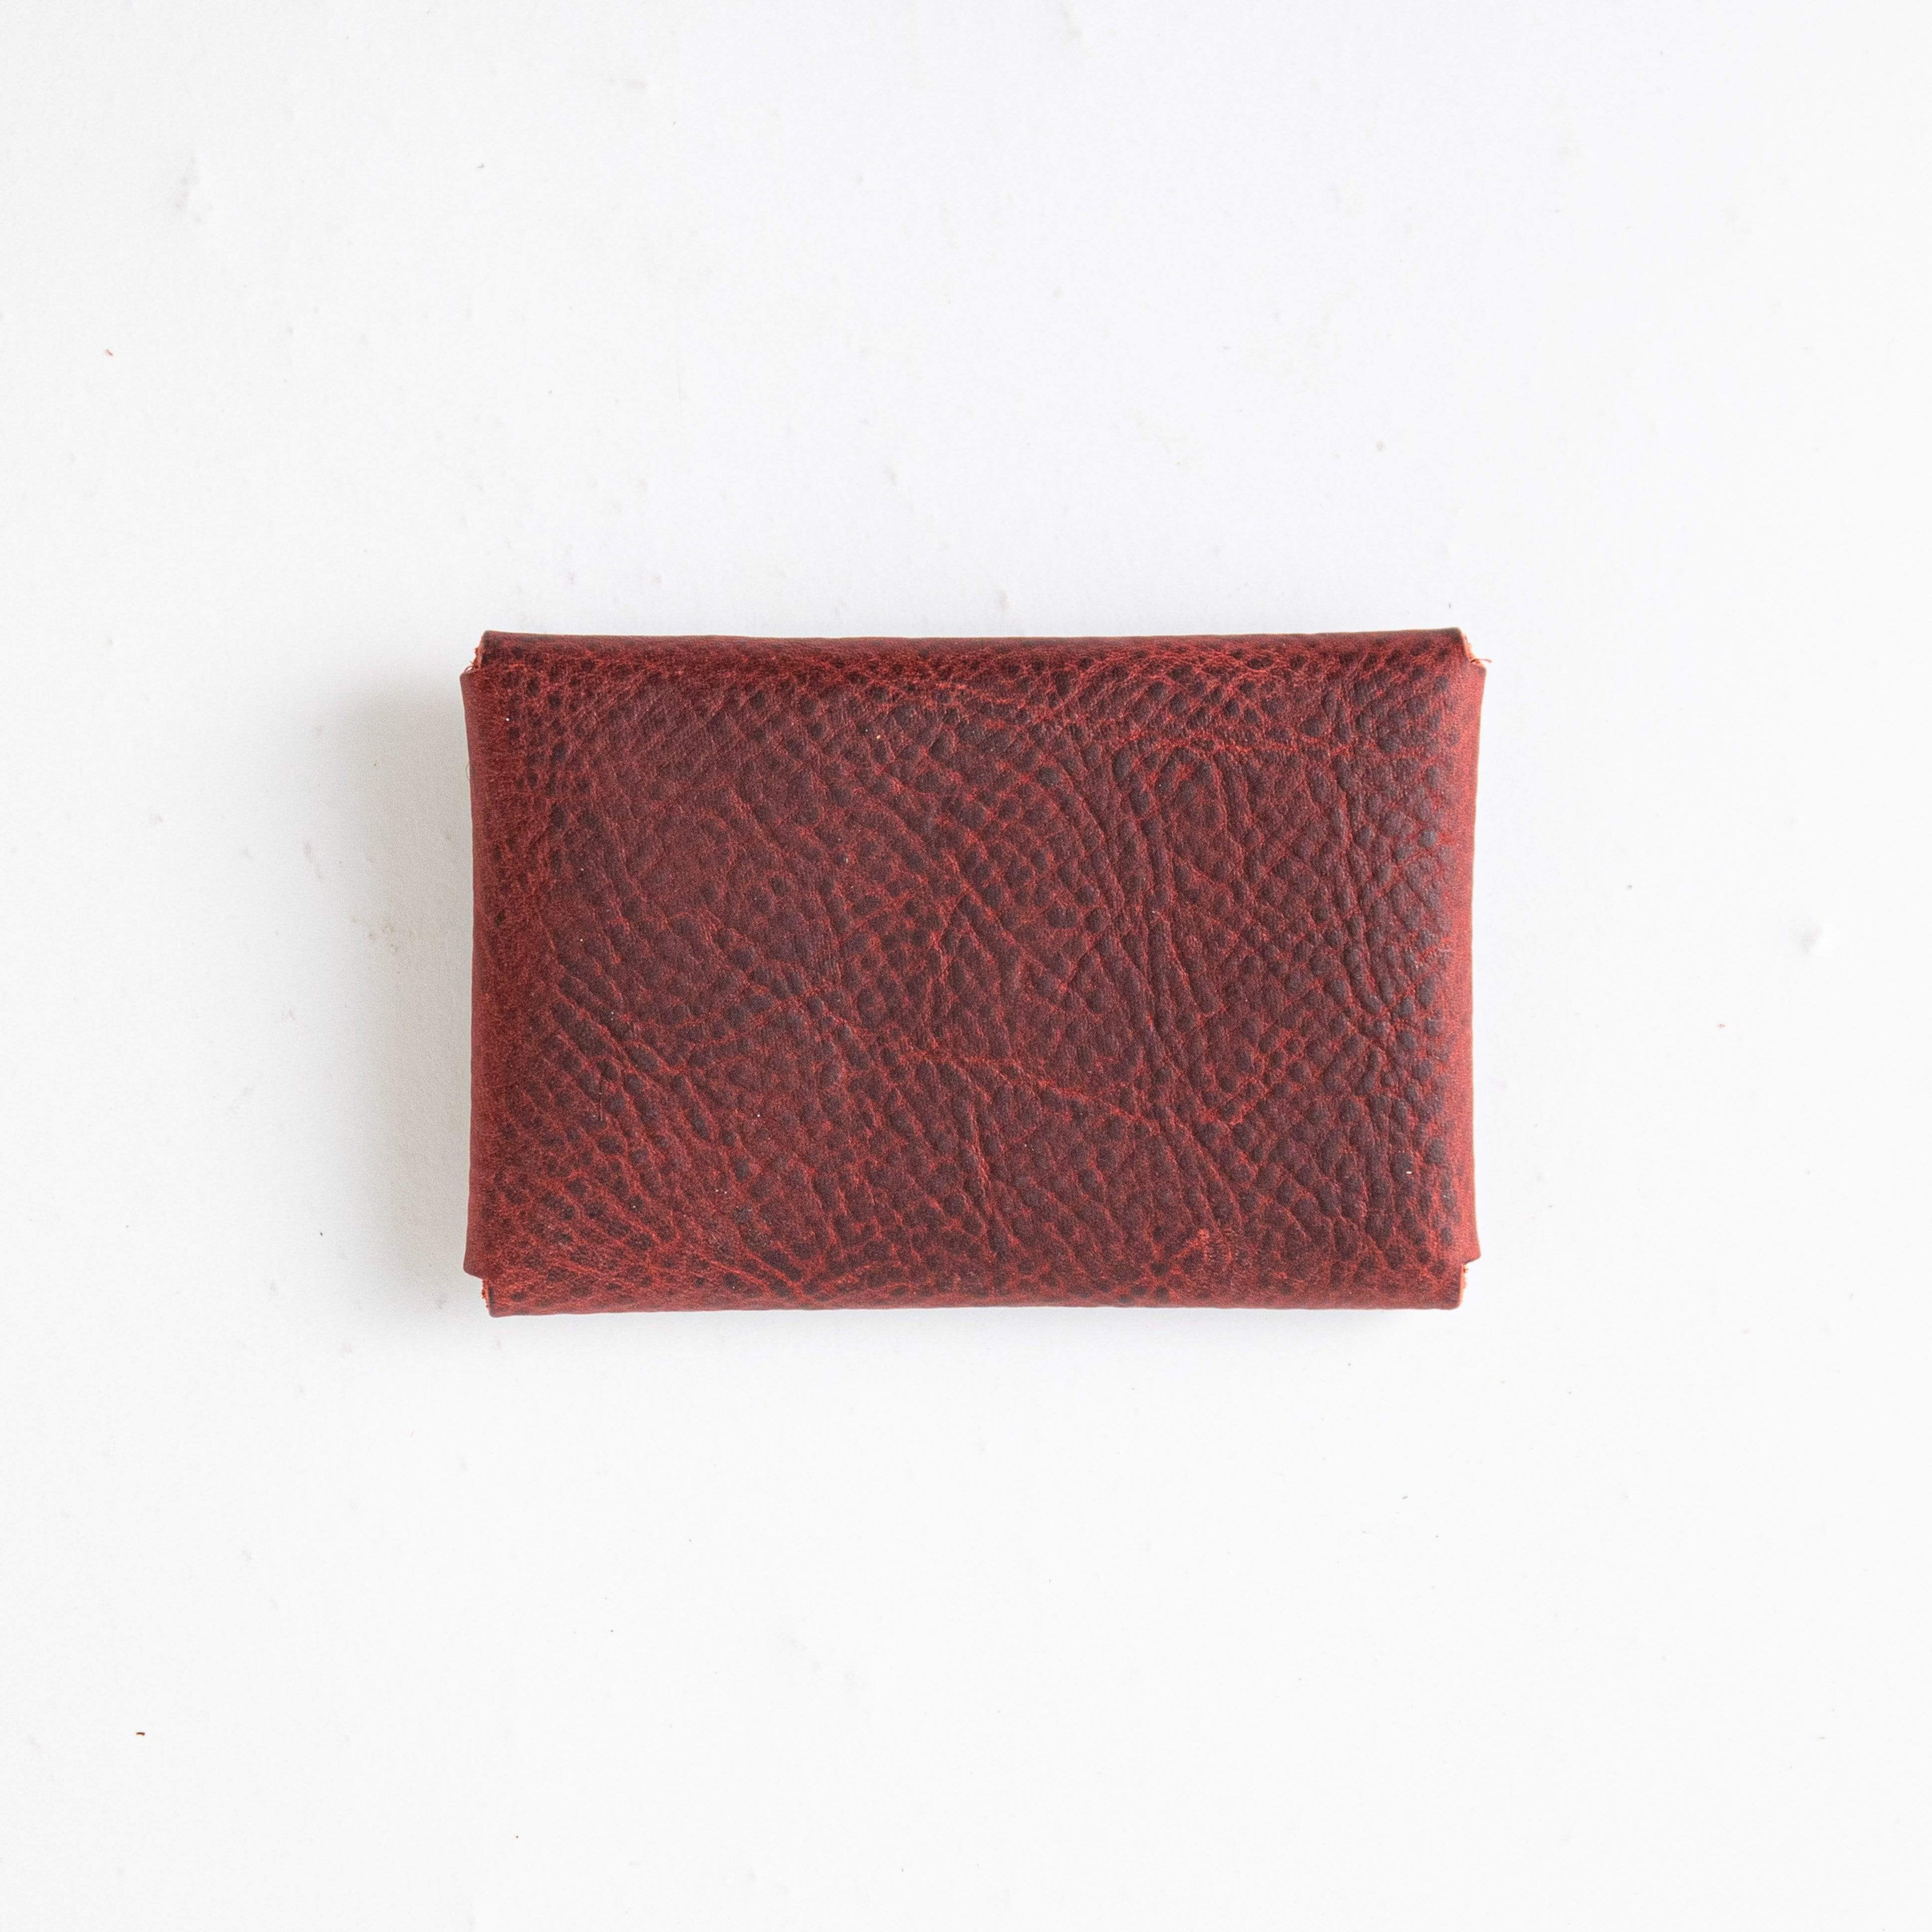 Louis Vuitton $475 Slender Wallet Review 